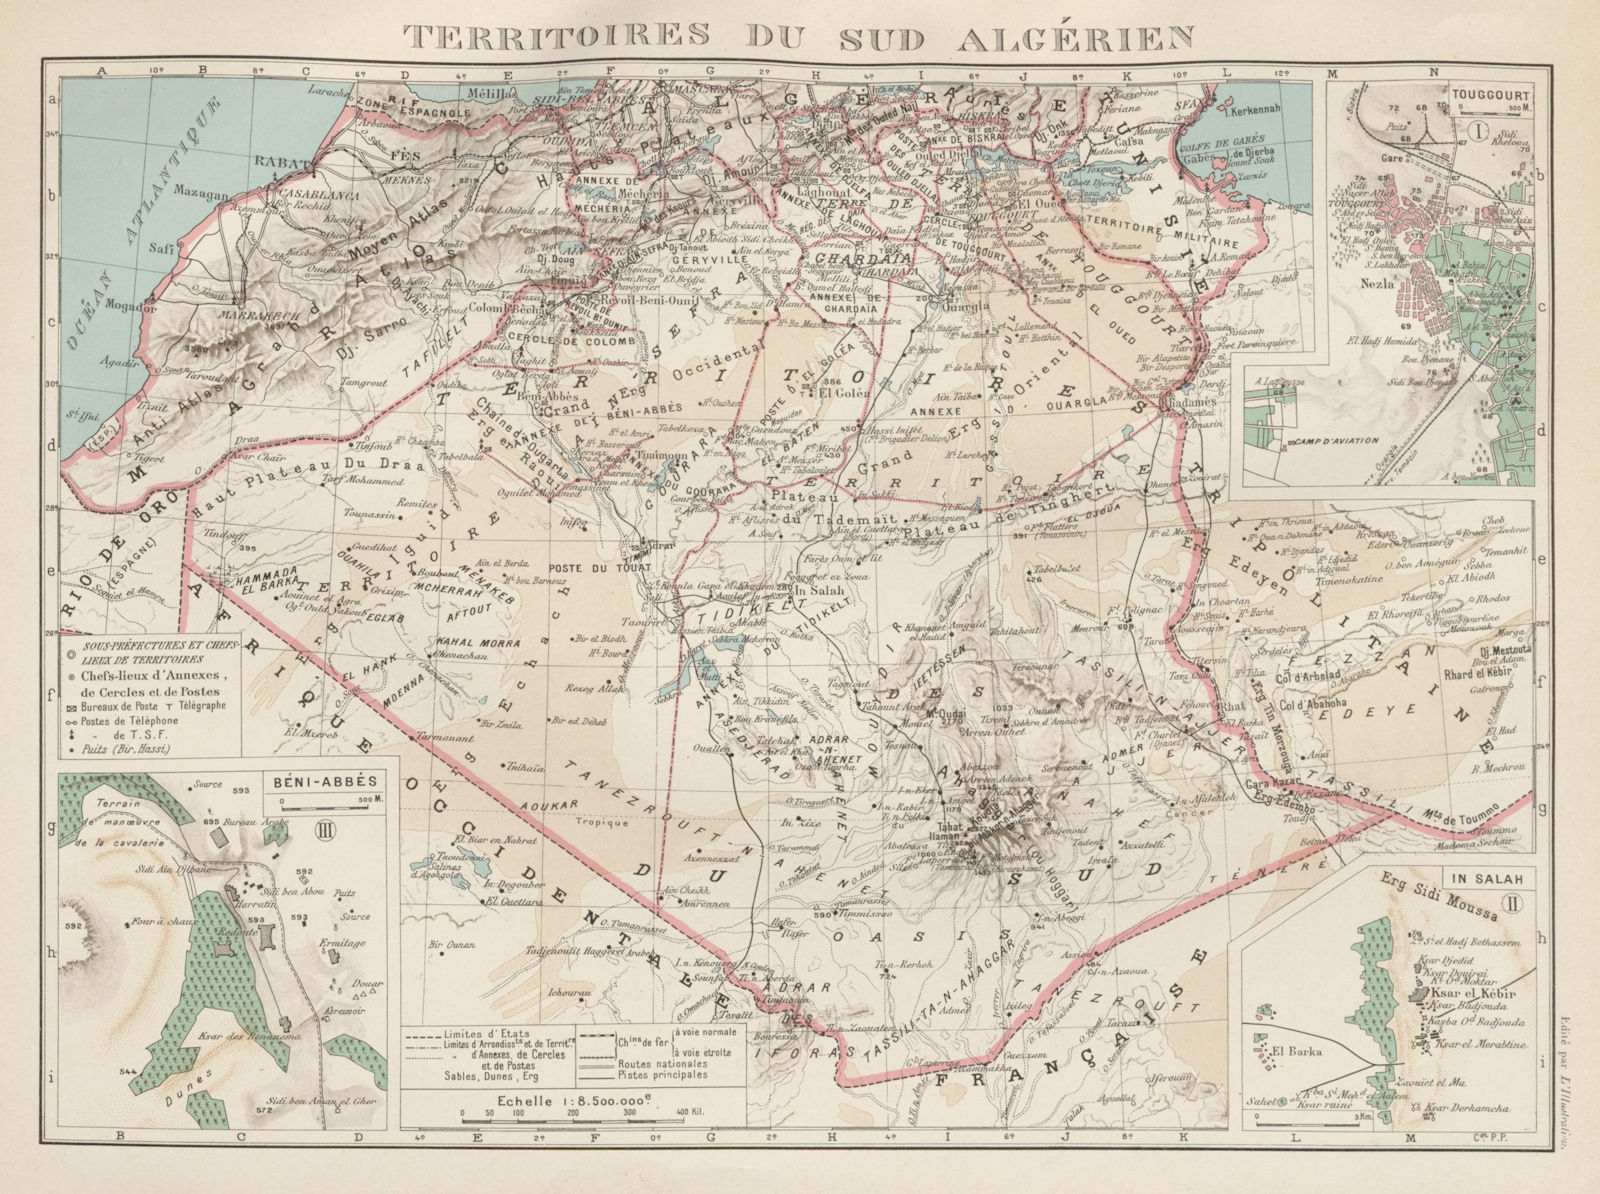 FRENCH ALGERIA. Territoires sud Algerien. Béni-Abbès Touggourt In Salah 1929 map